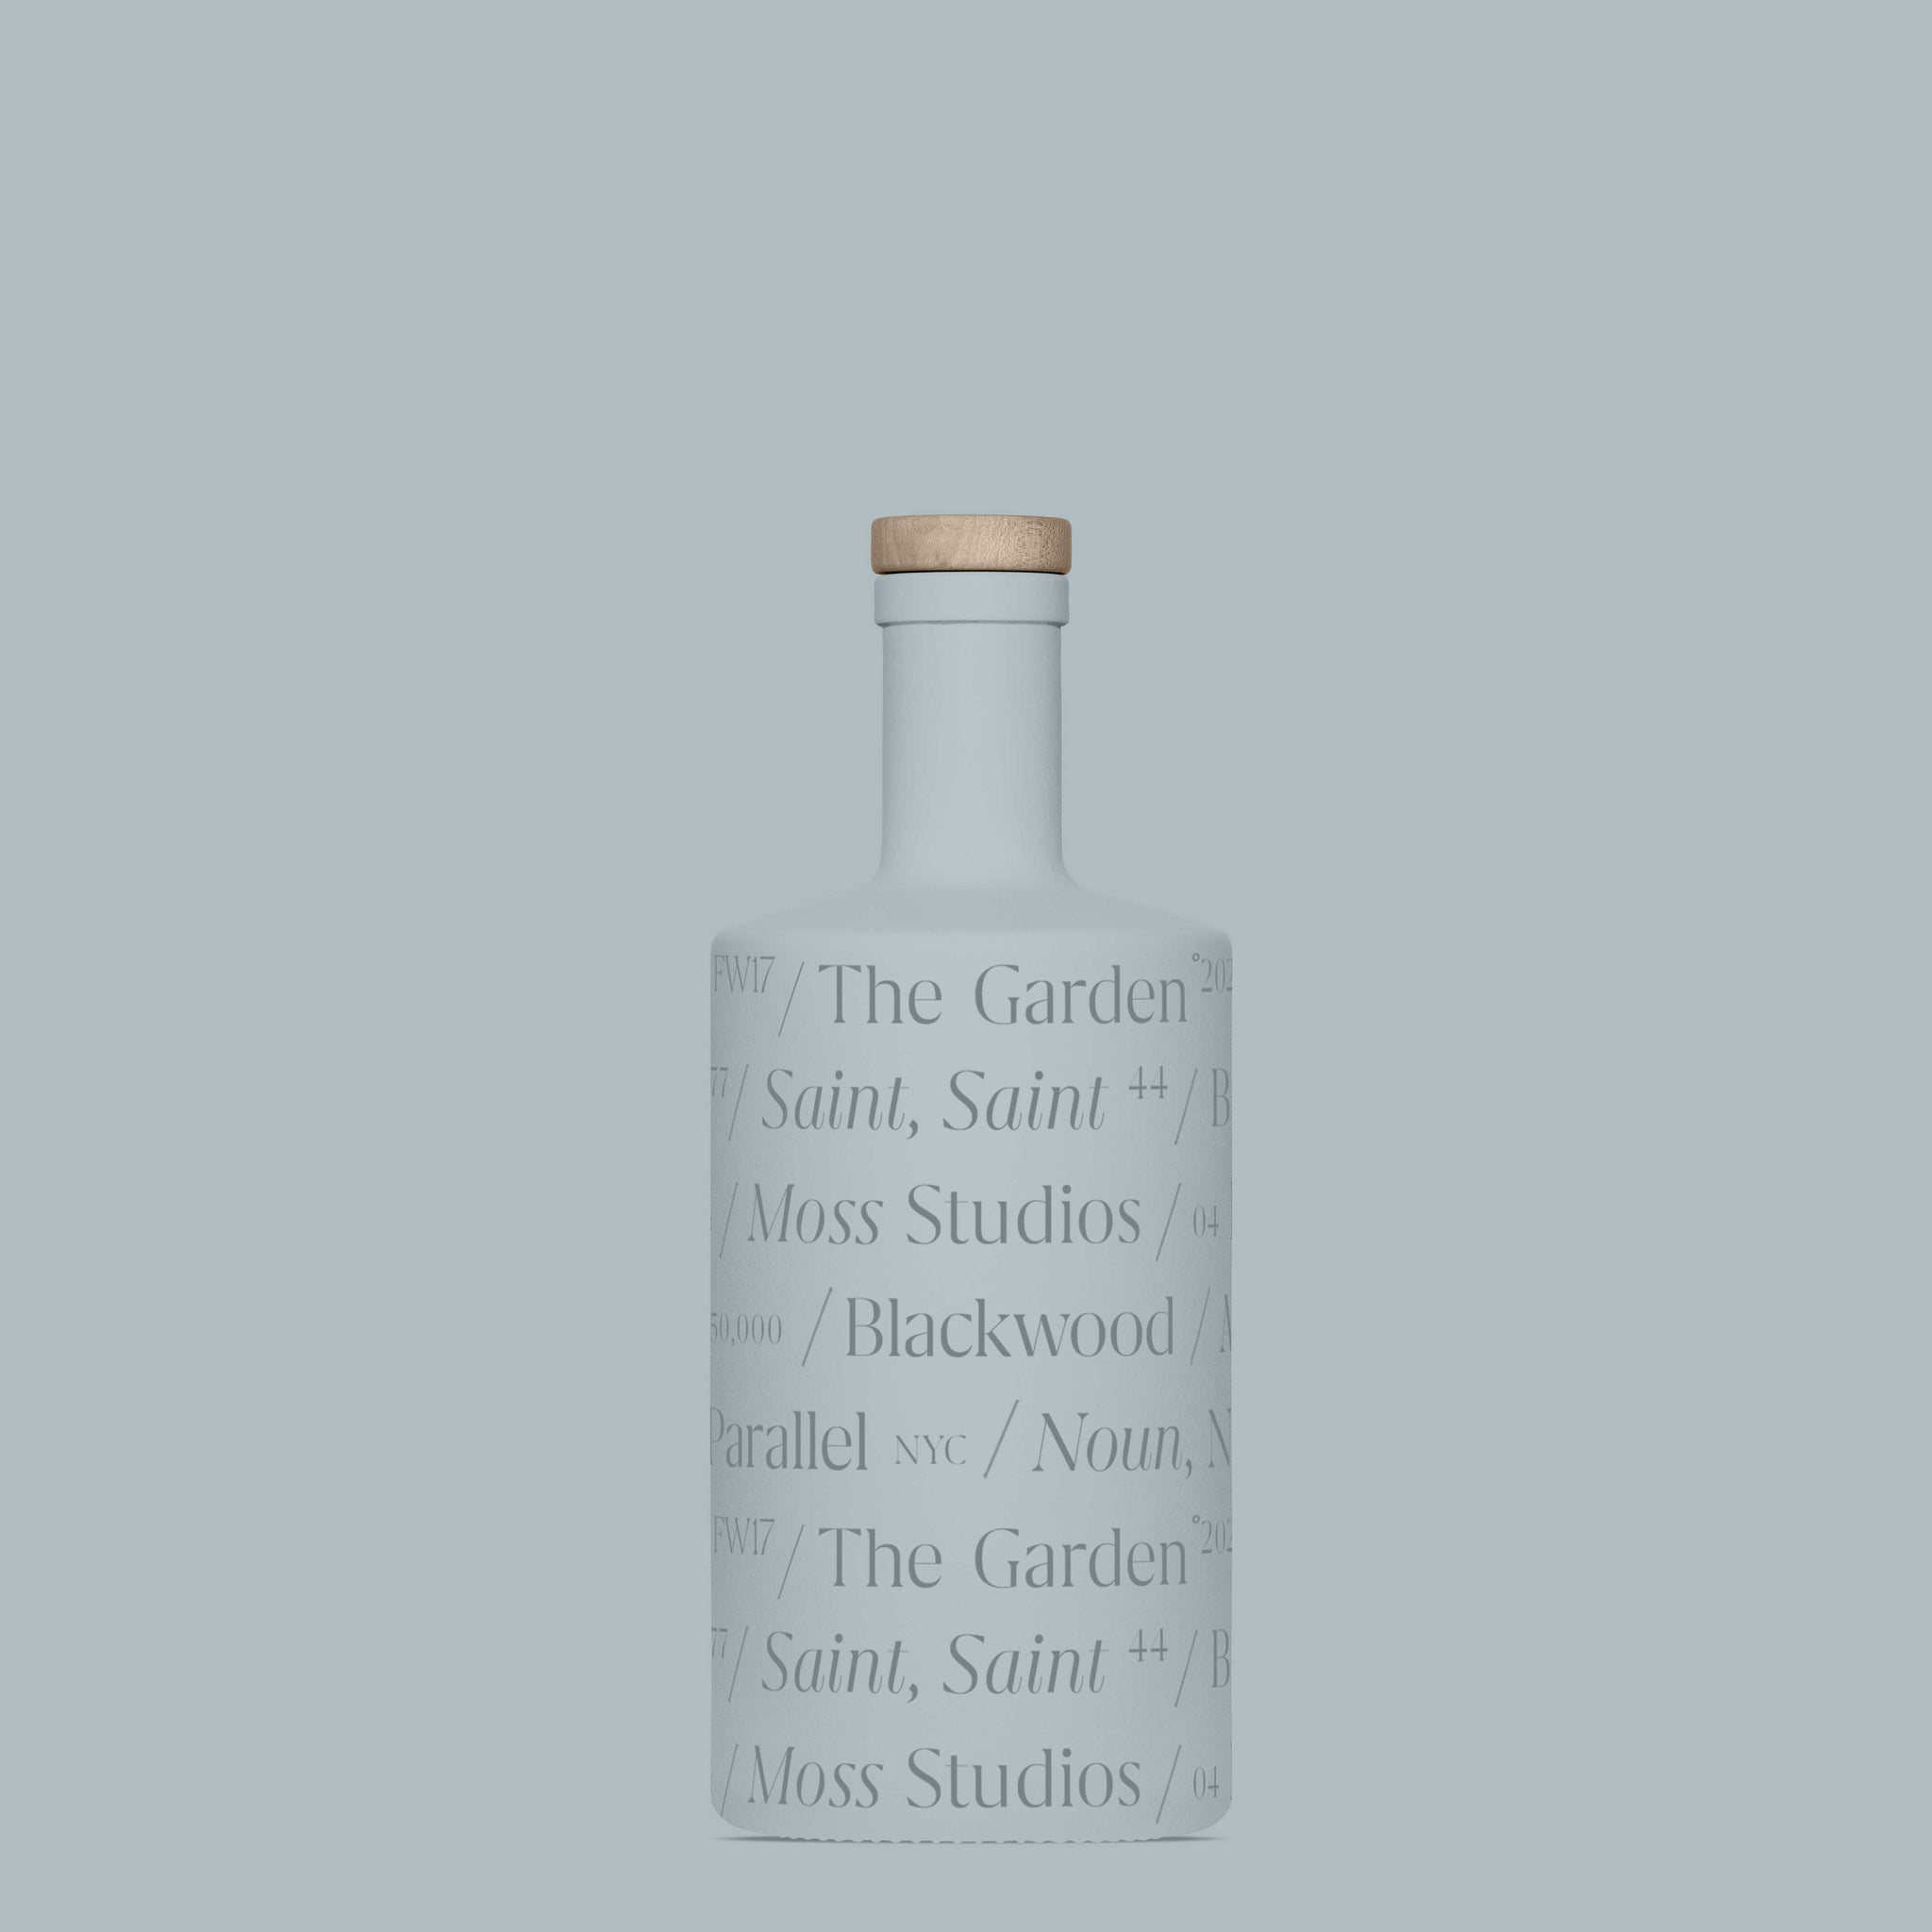 Ceramic Liquor Bottle Mockup No. 2 - Copal Studio Packaging Mockups For Designers